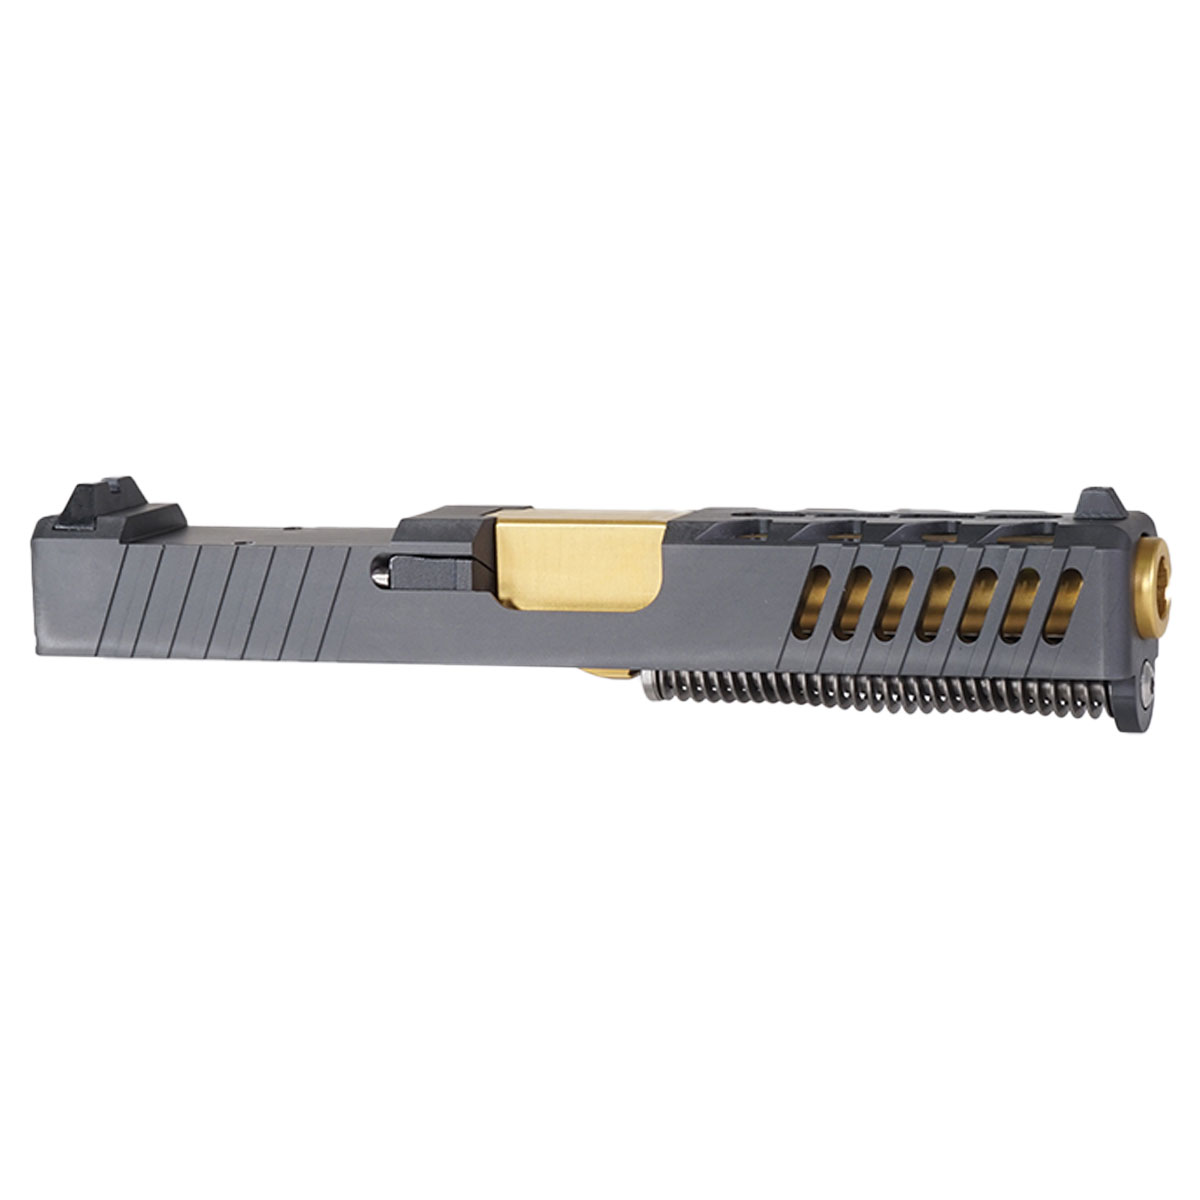 DDS 'Industrialist Revolution' 9mm Complete Slide Kit - Glock 19 Gen 1-3 Compatible